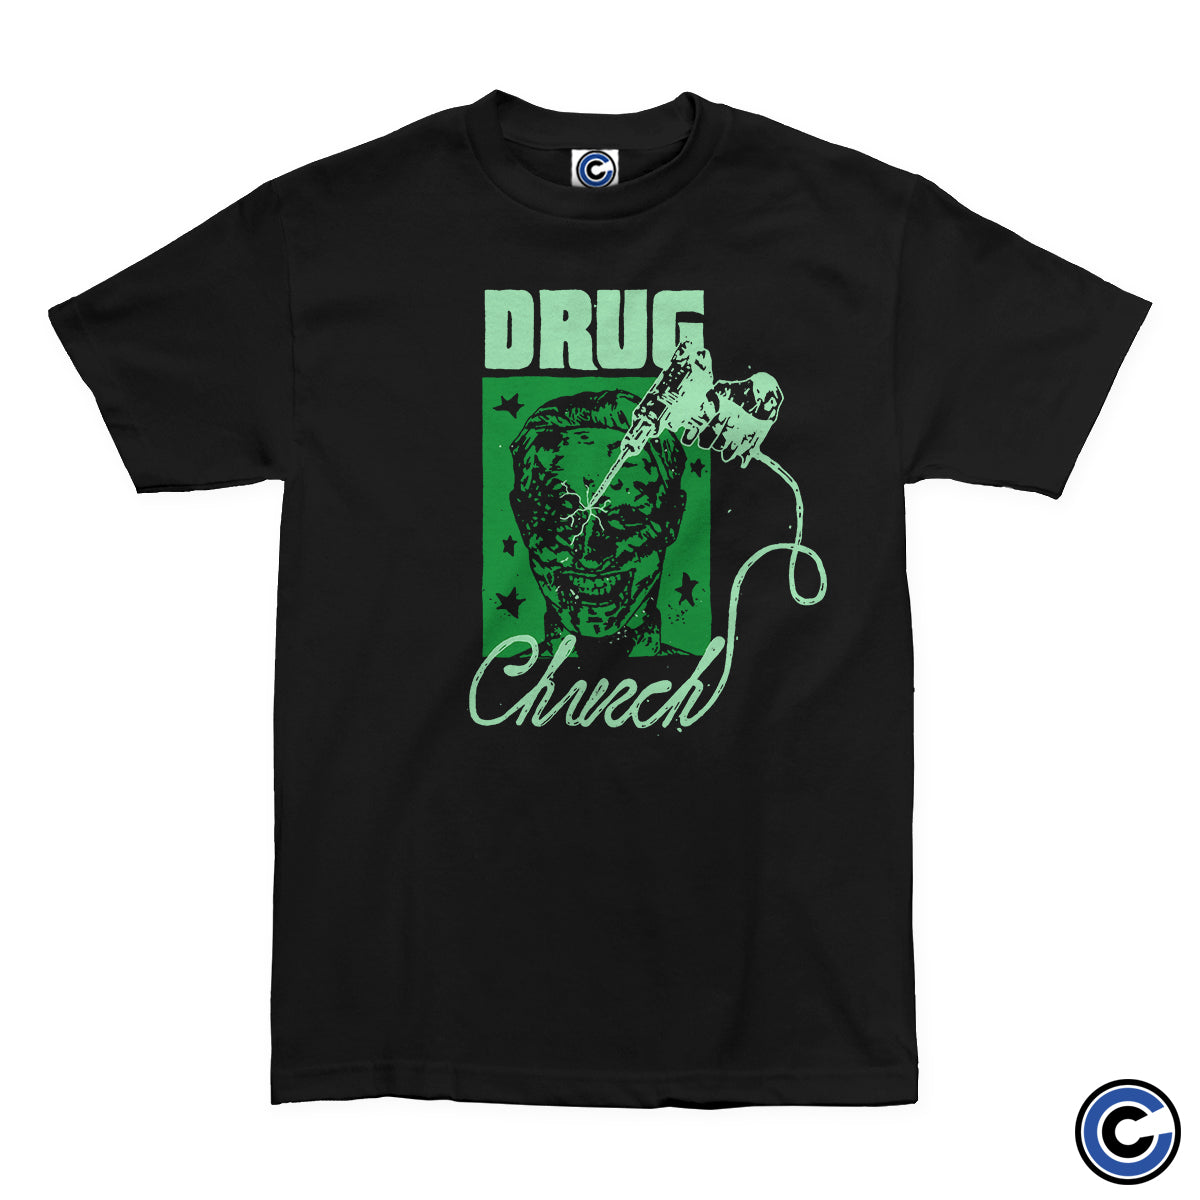 Drug Church "Drill" Shirt